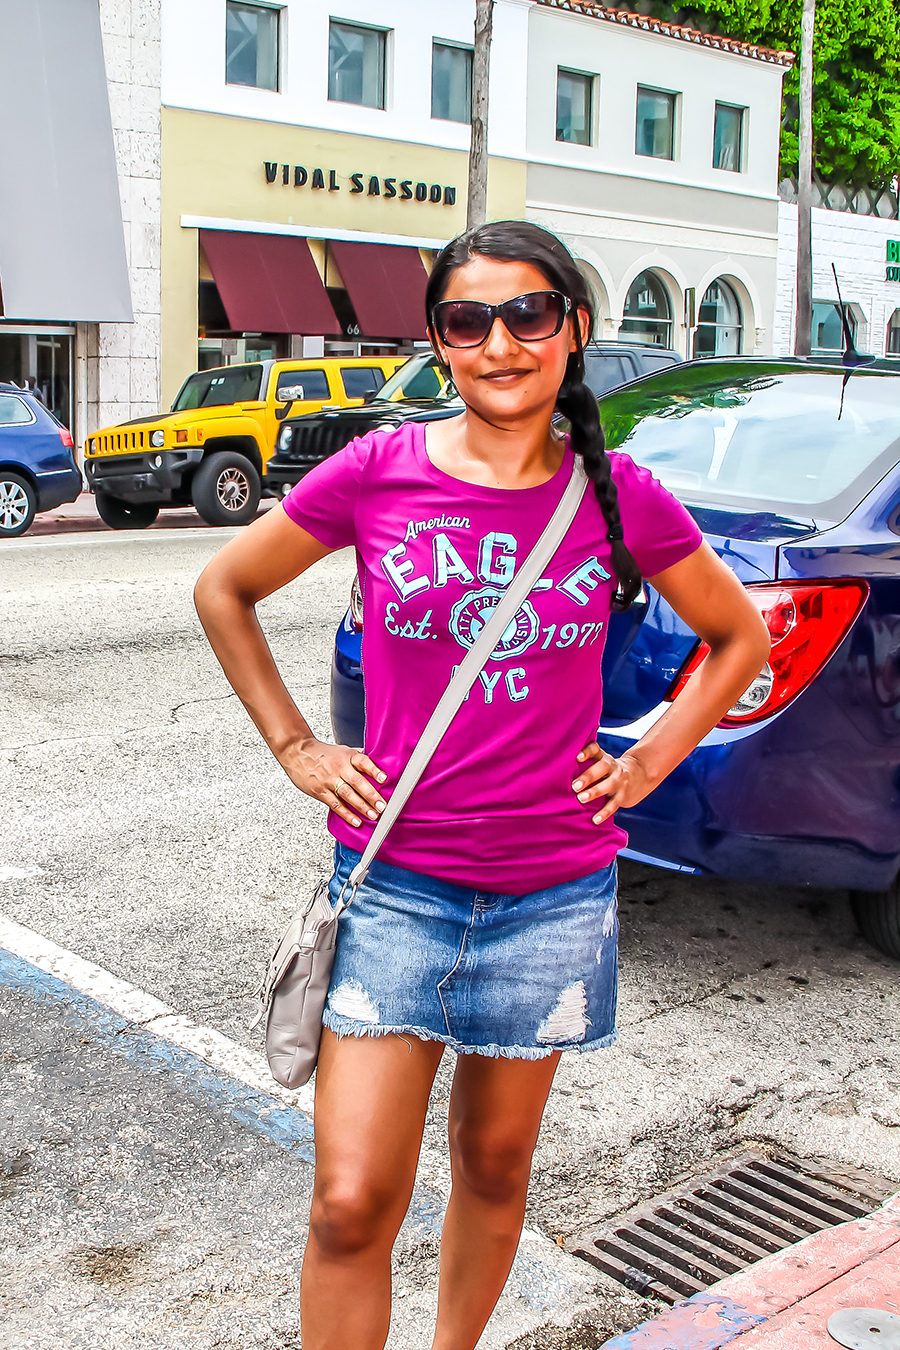 Florida Road Trip adventure - I pose on the sidewalk in Miami